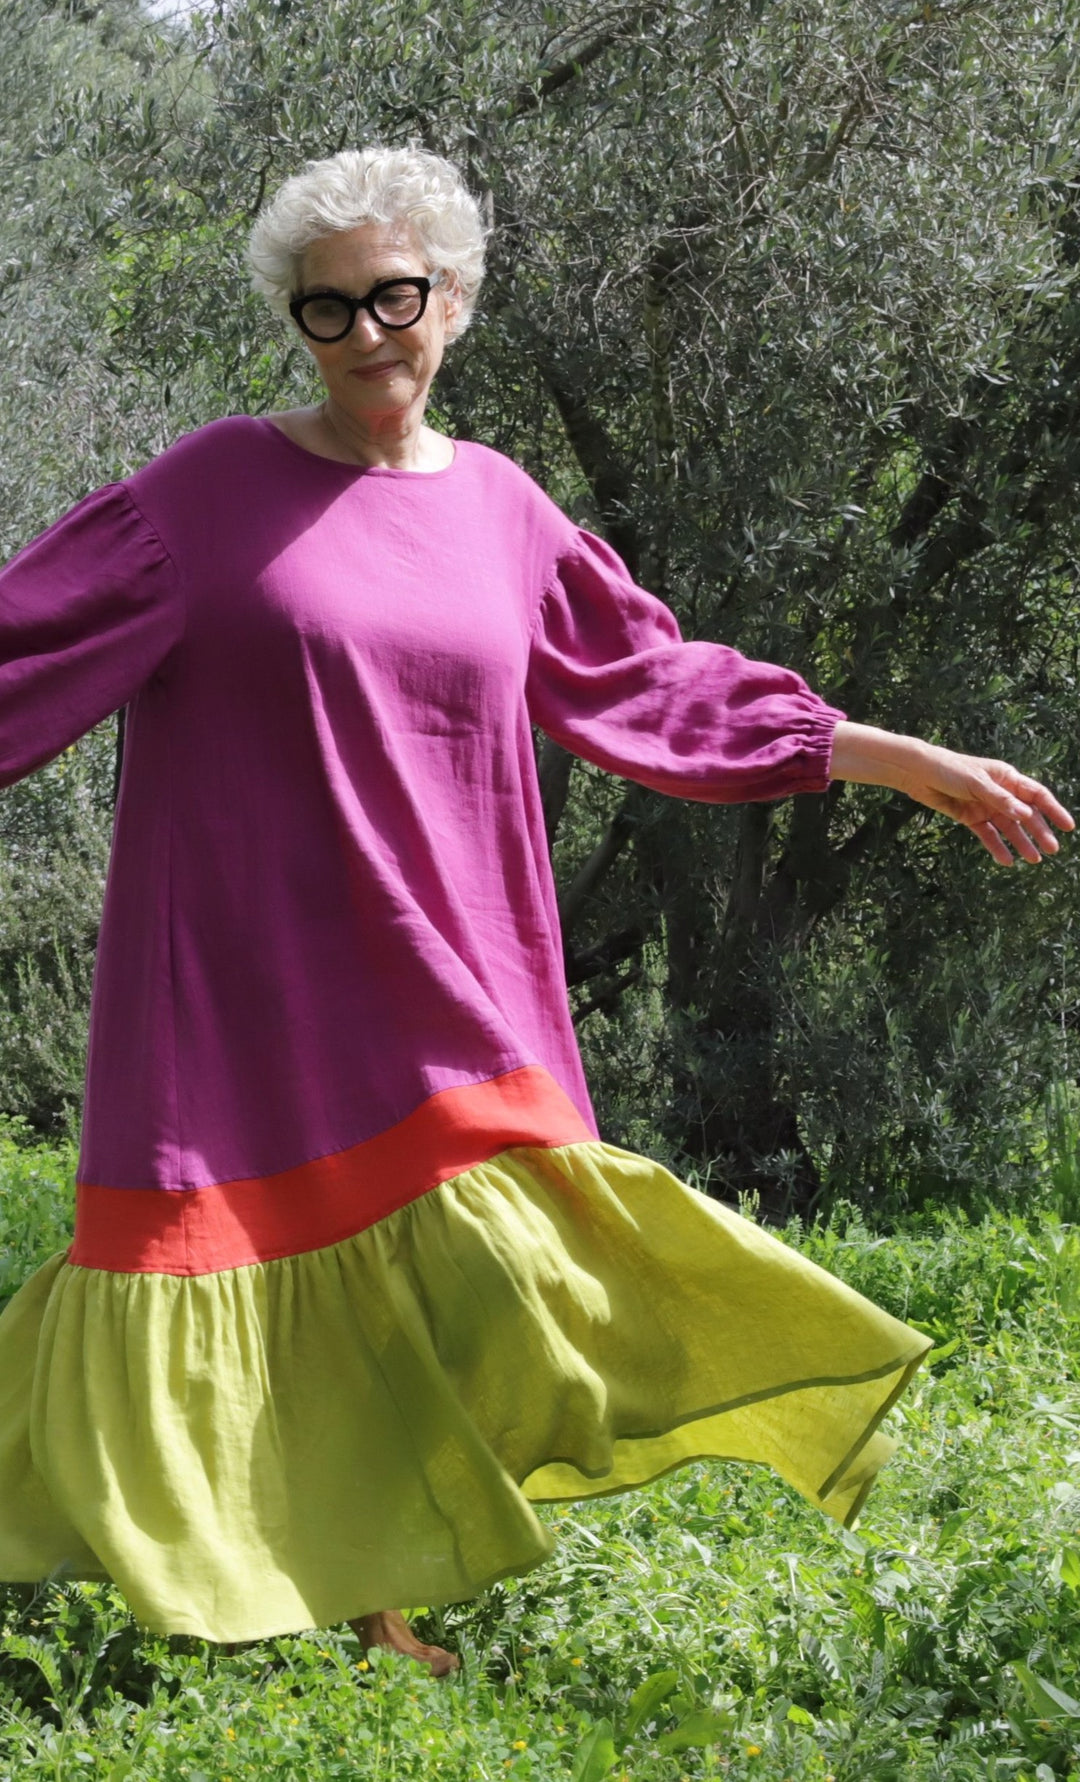 Sari Linen Swing Dress